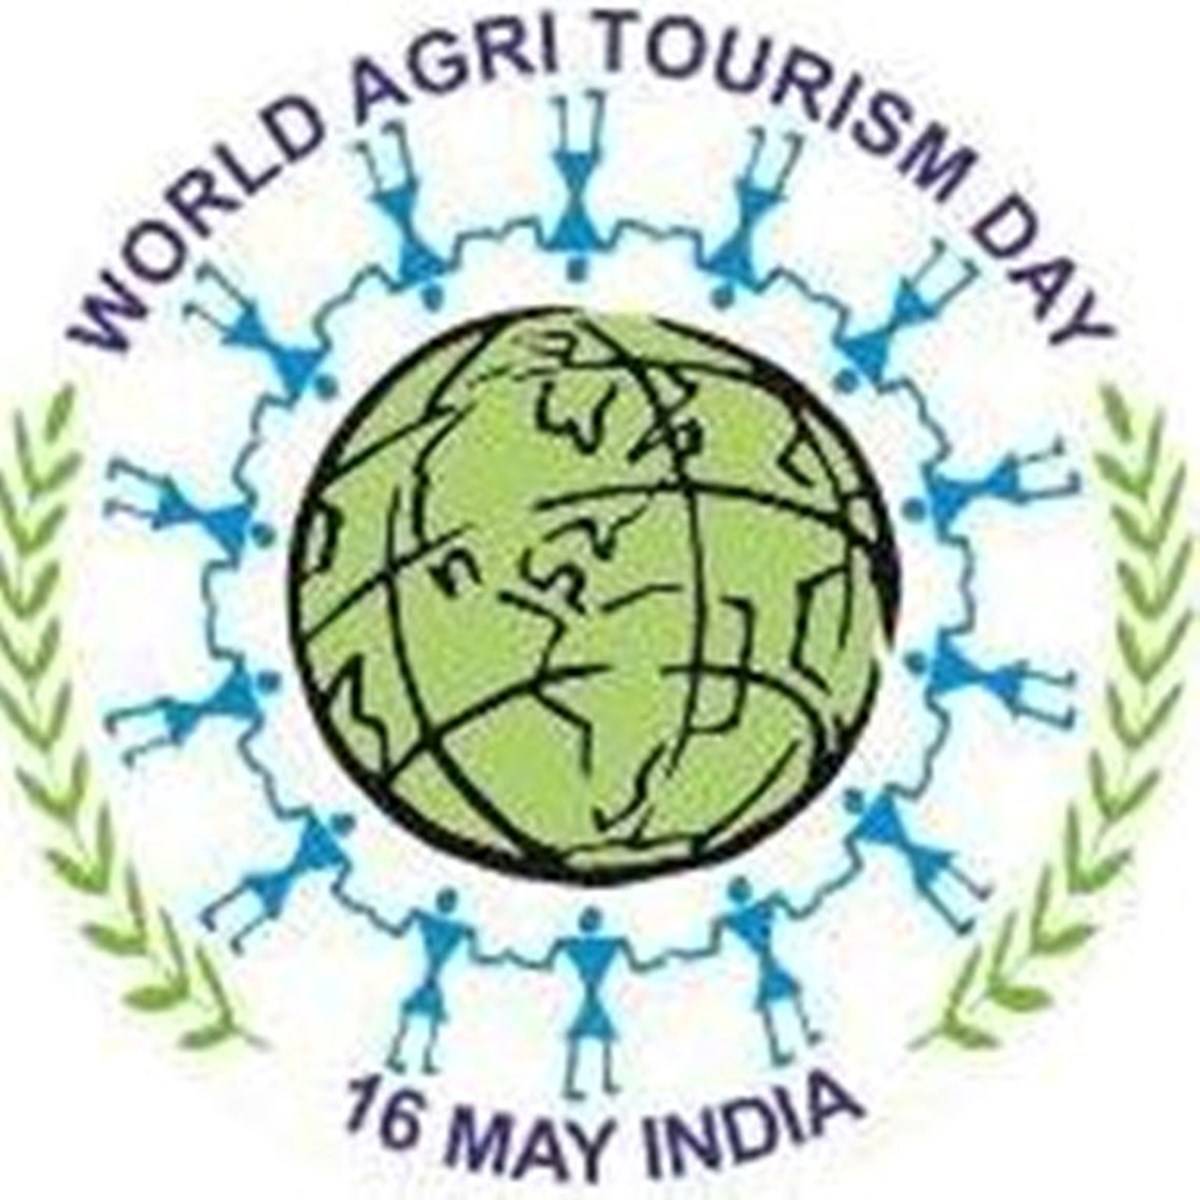 World Agri Tourism Day